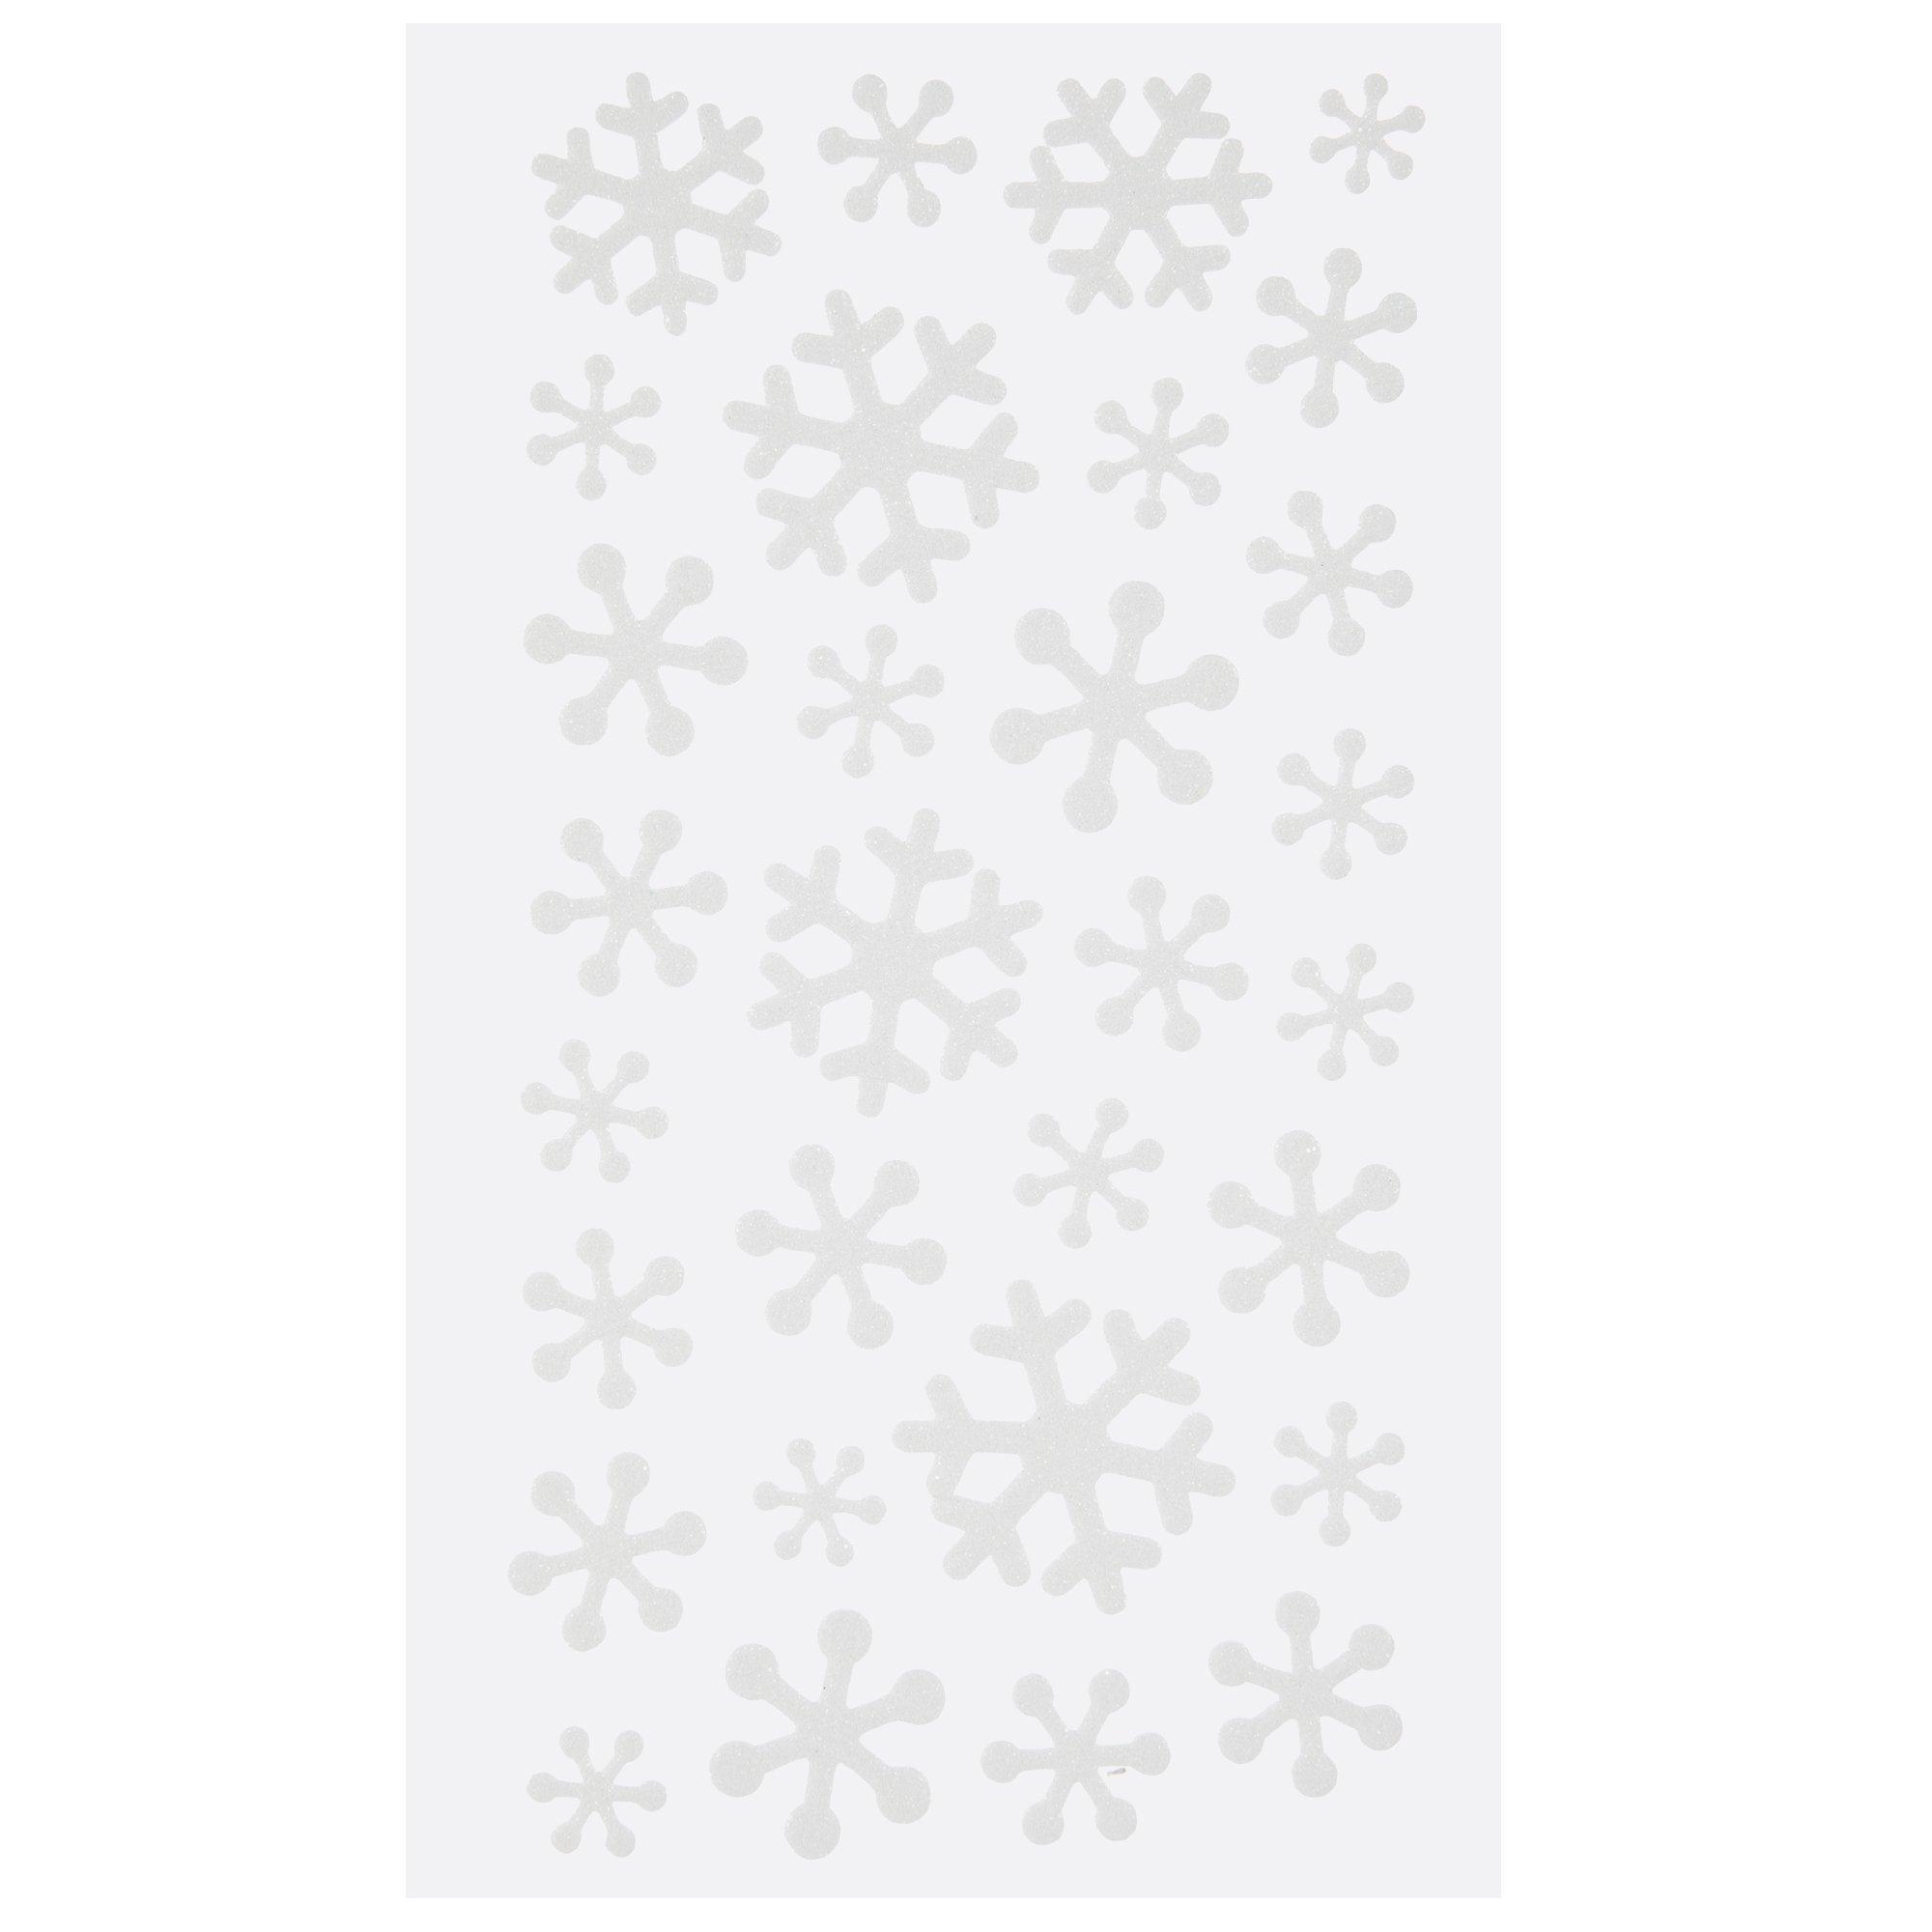 Snowflake Glitter Stickers, Hobby Lobby, 854018